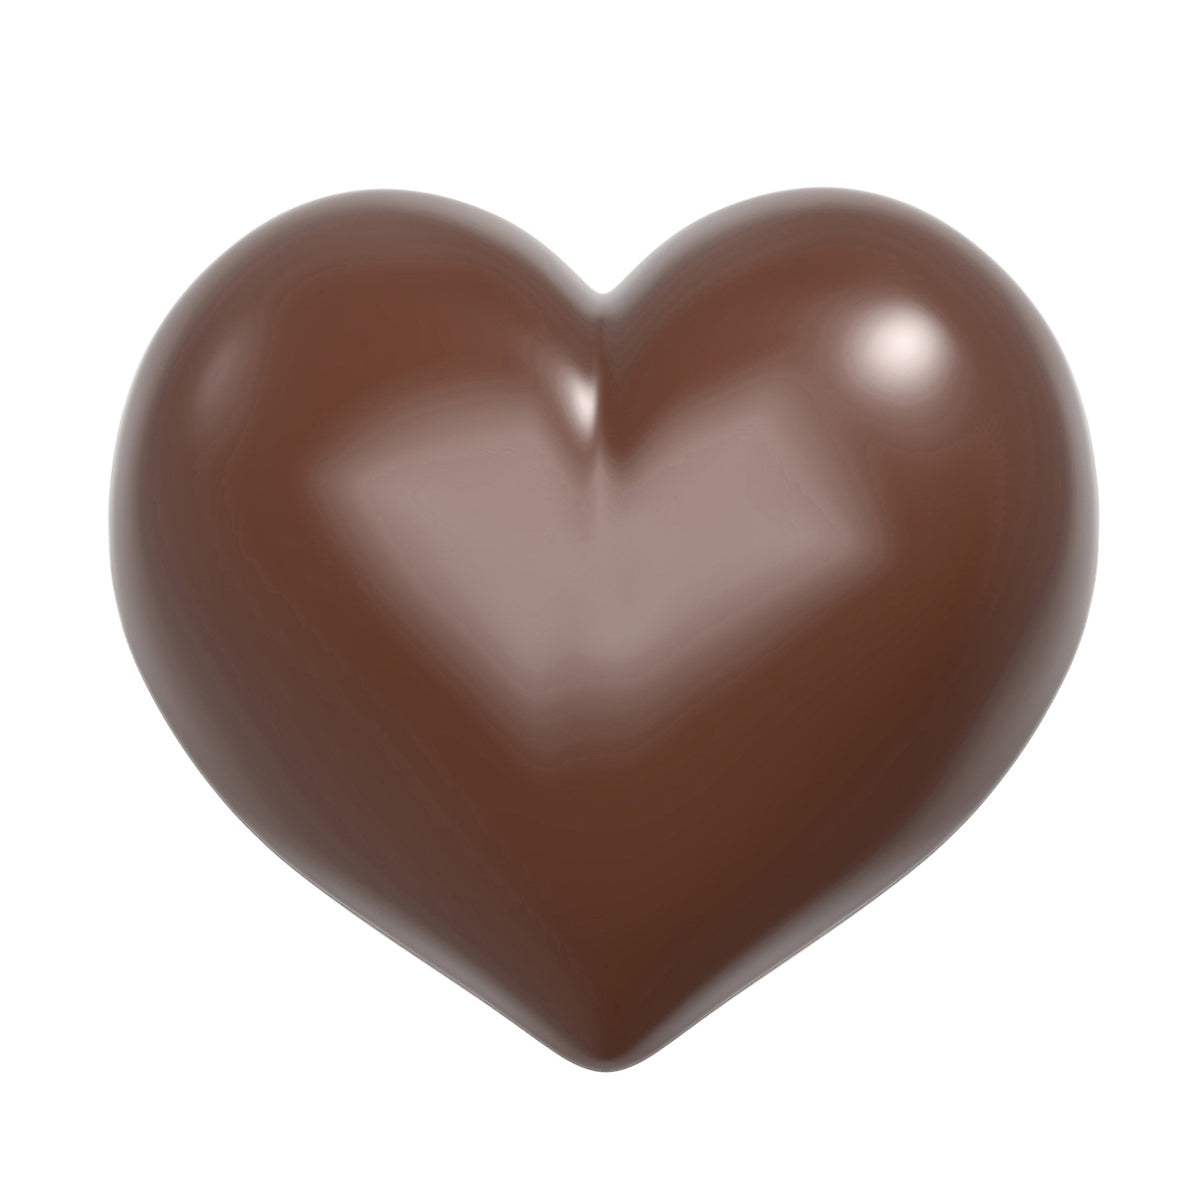 CHOCOLATE MOULD PUFFY HEART CHOCOLATE BOMB - NORA CHOKLADSKOLA CW12088 - Zucchero Canada